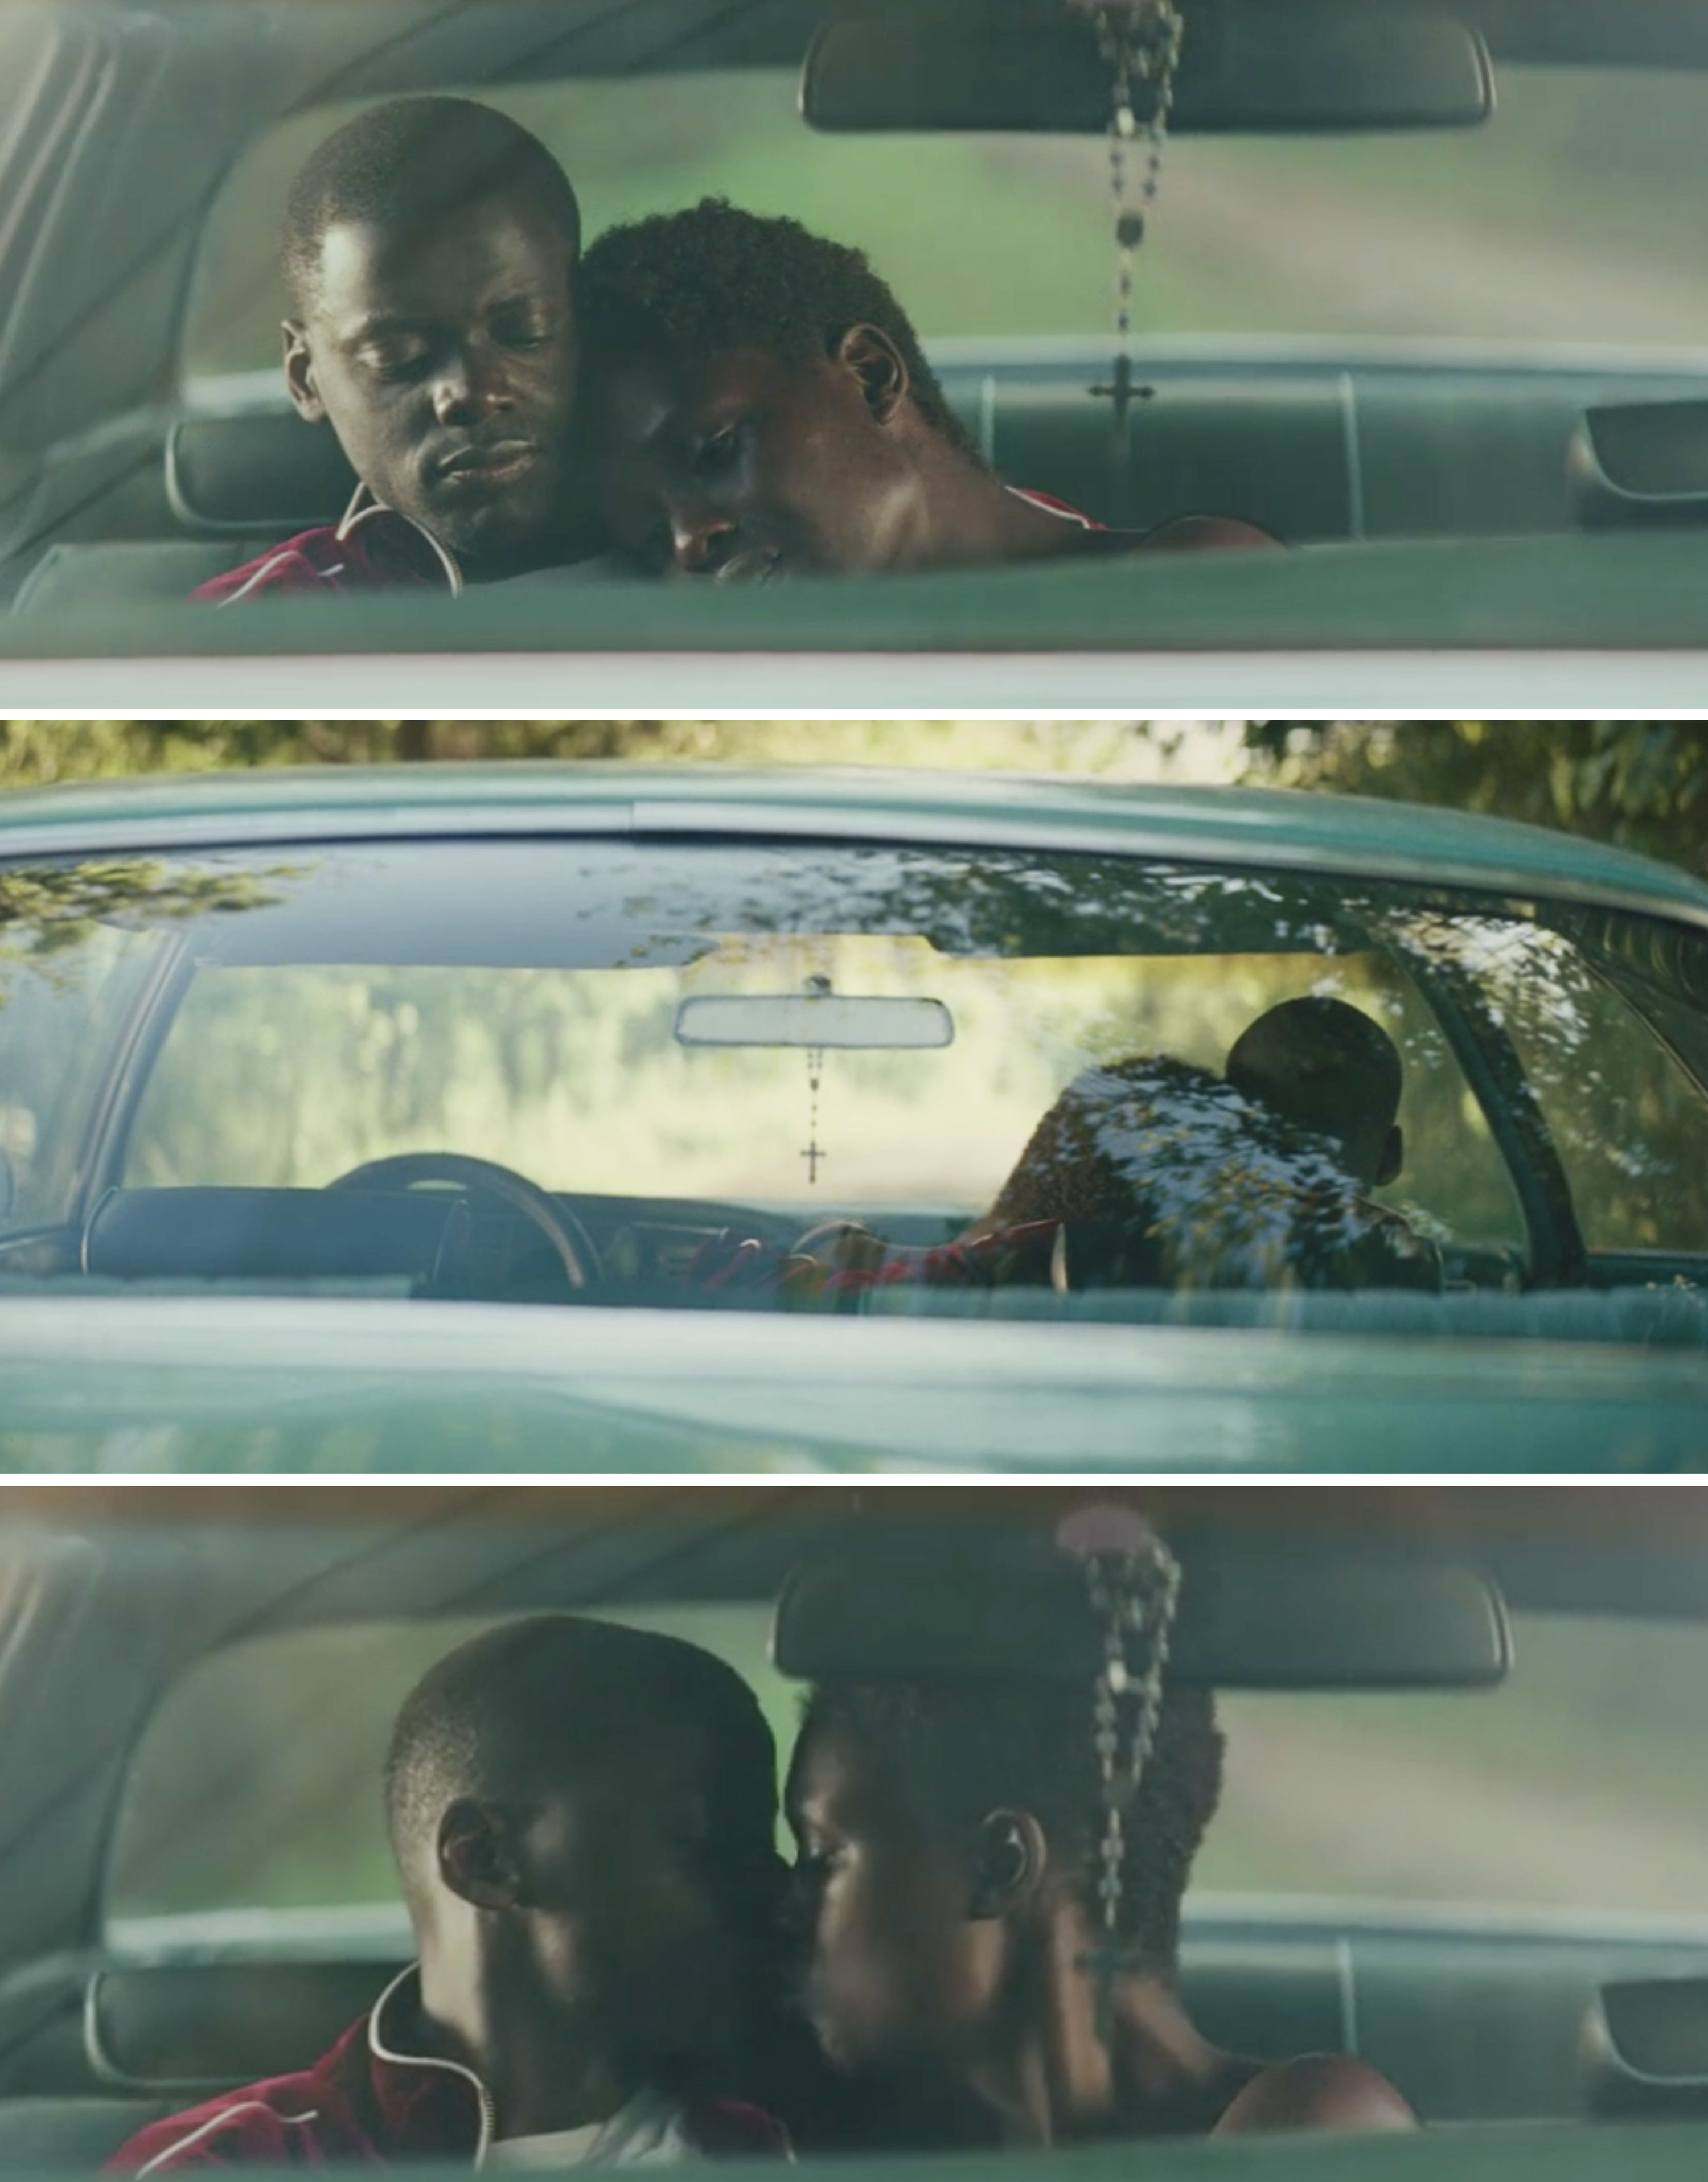 Jodie Smith-Turner and Daniel Kaluuya kissing in a car